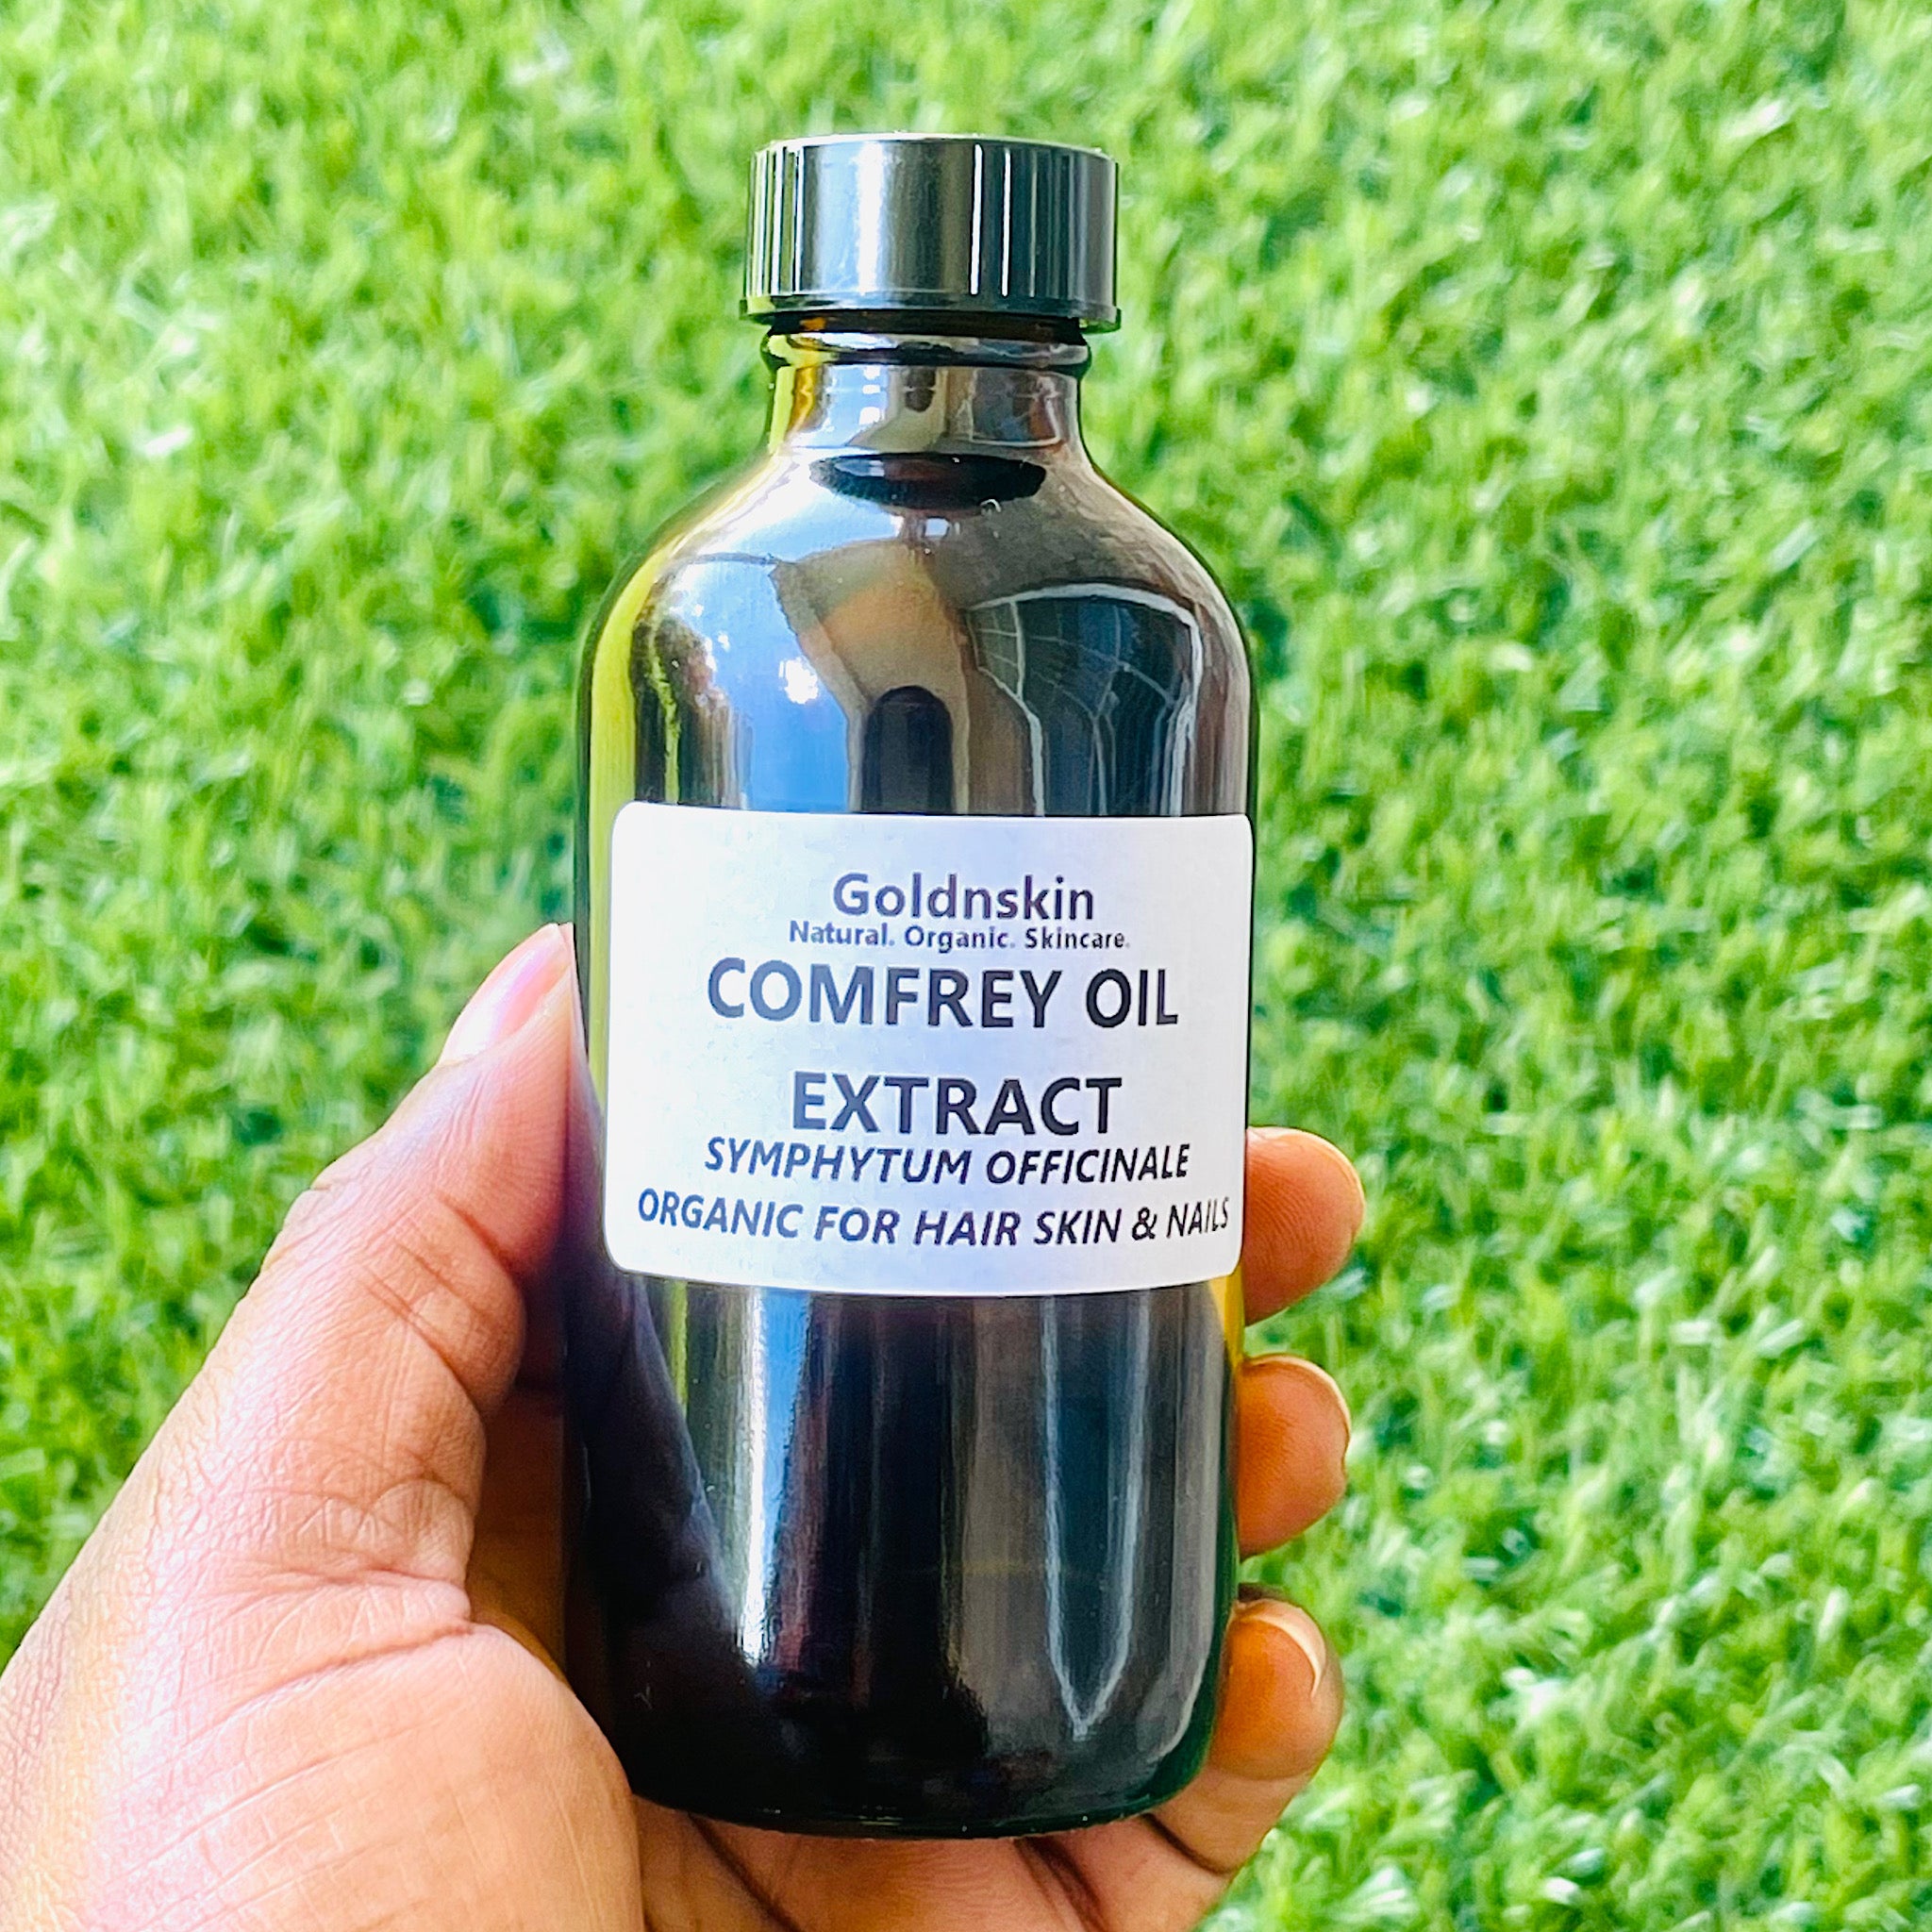 Comfrey oil